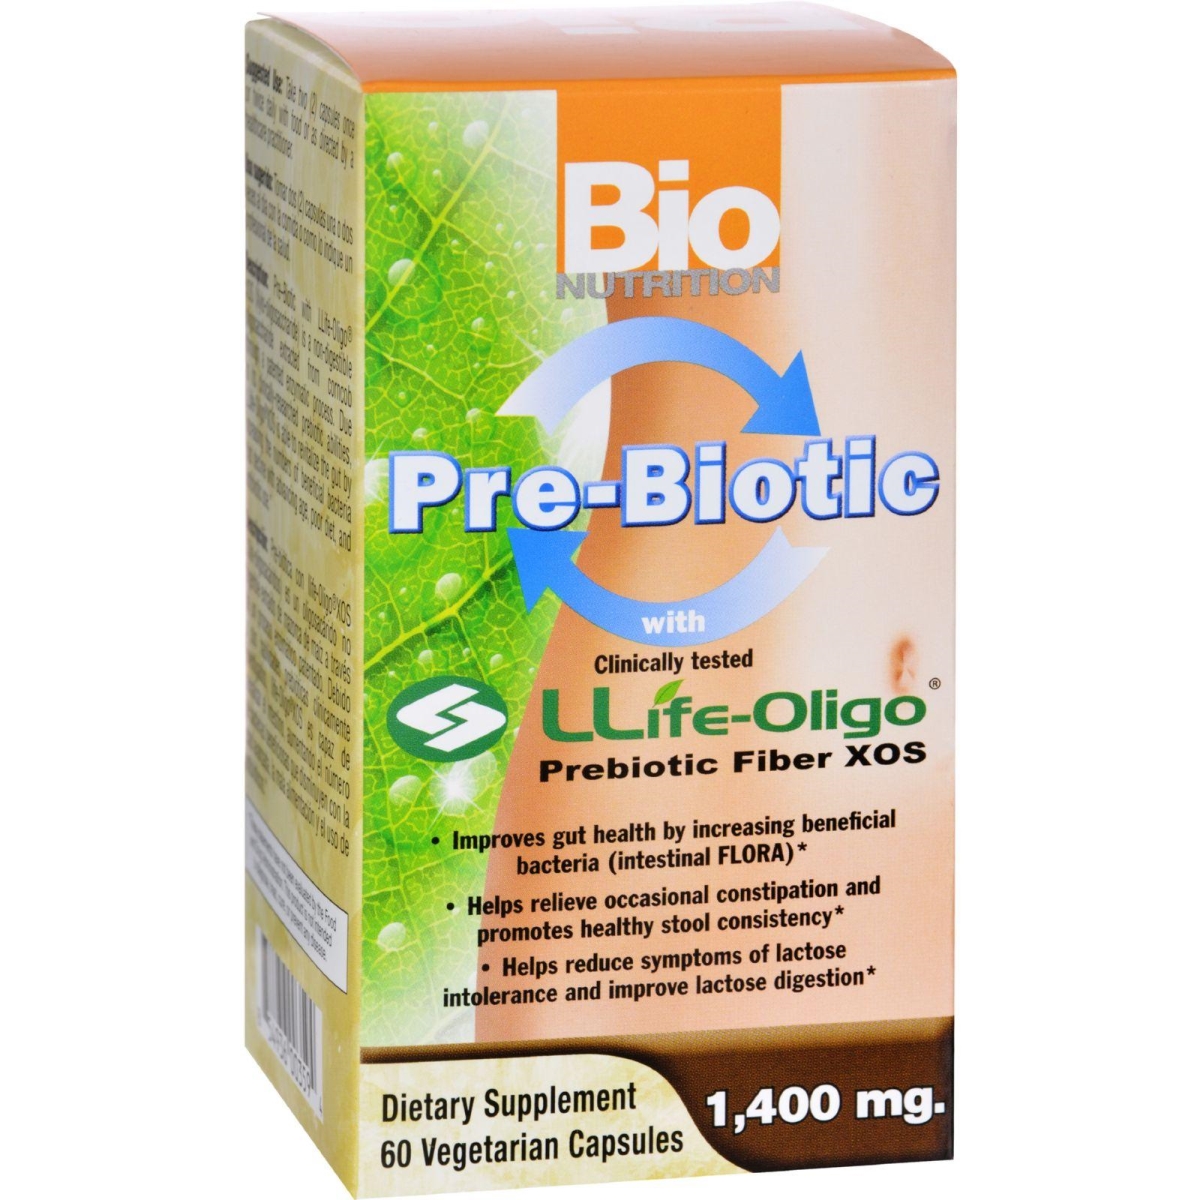 Bio Nutrition Hg1619386 1400 Mg Pre-biotic Fiber - Llife-oligo, 60 Vegetarian Capsules